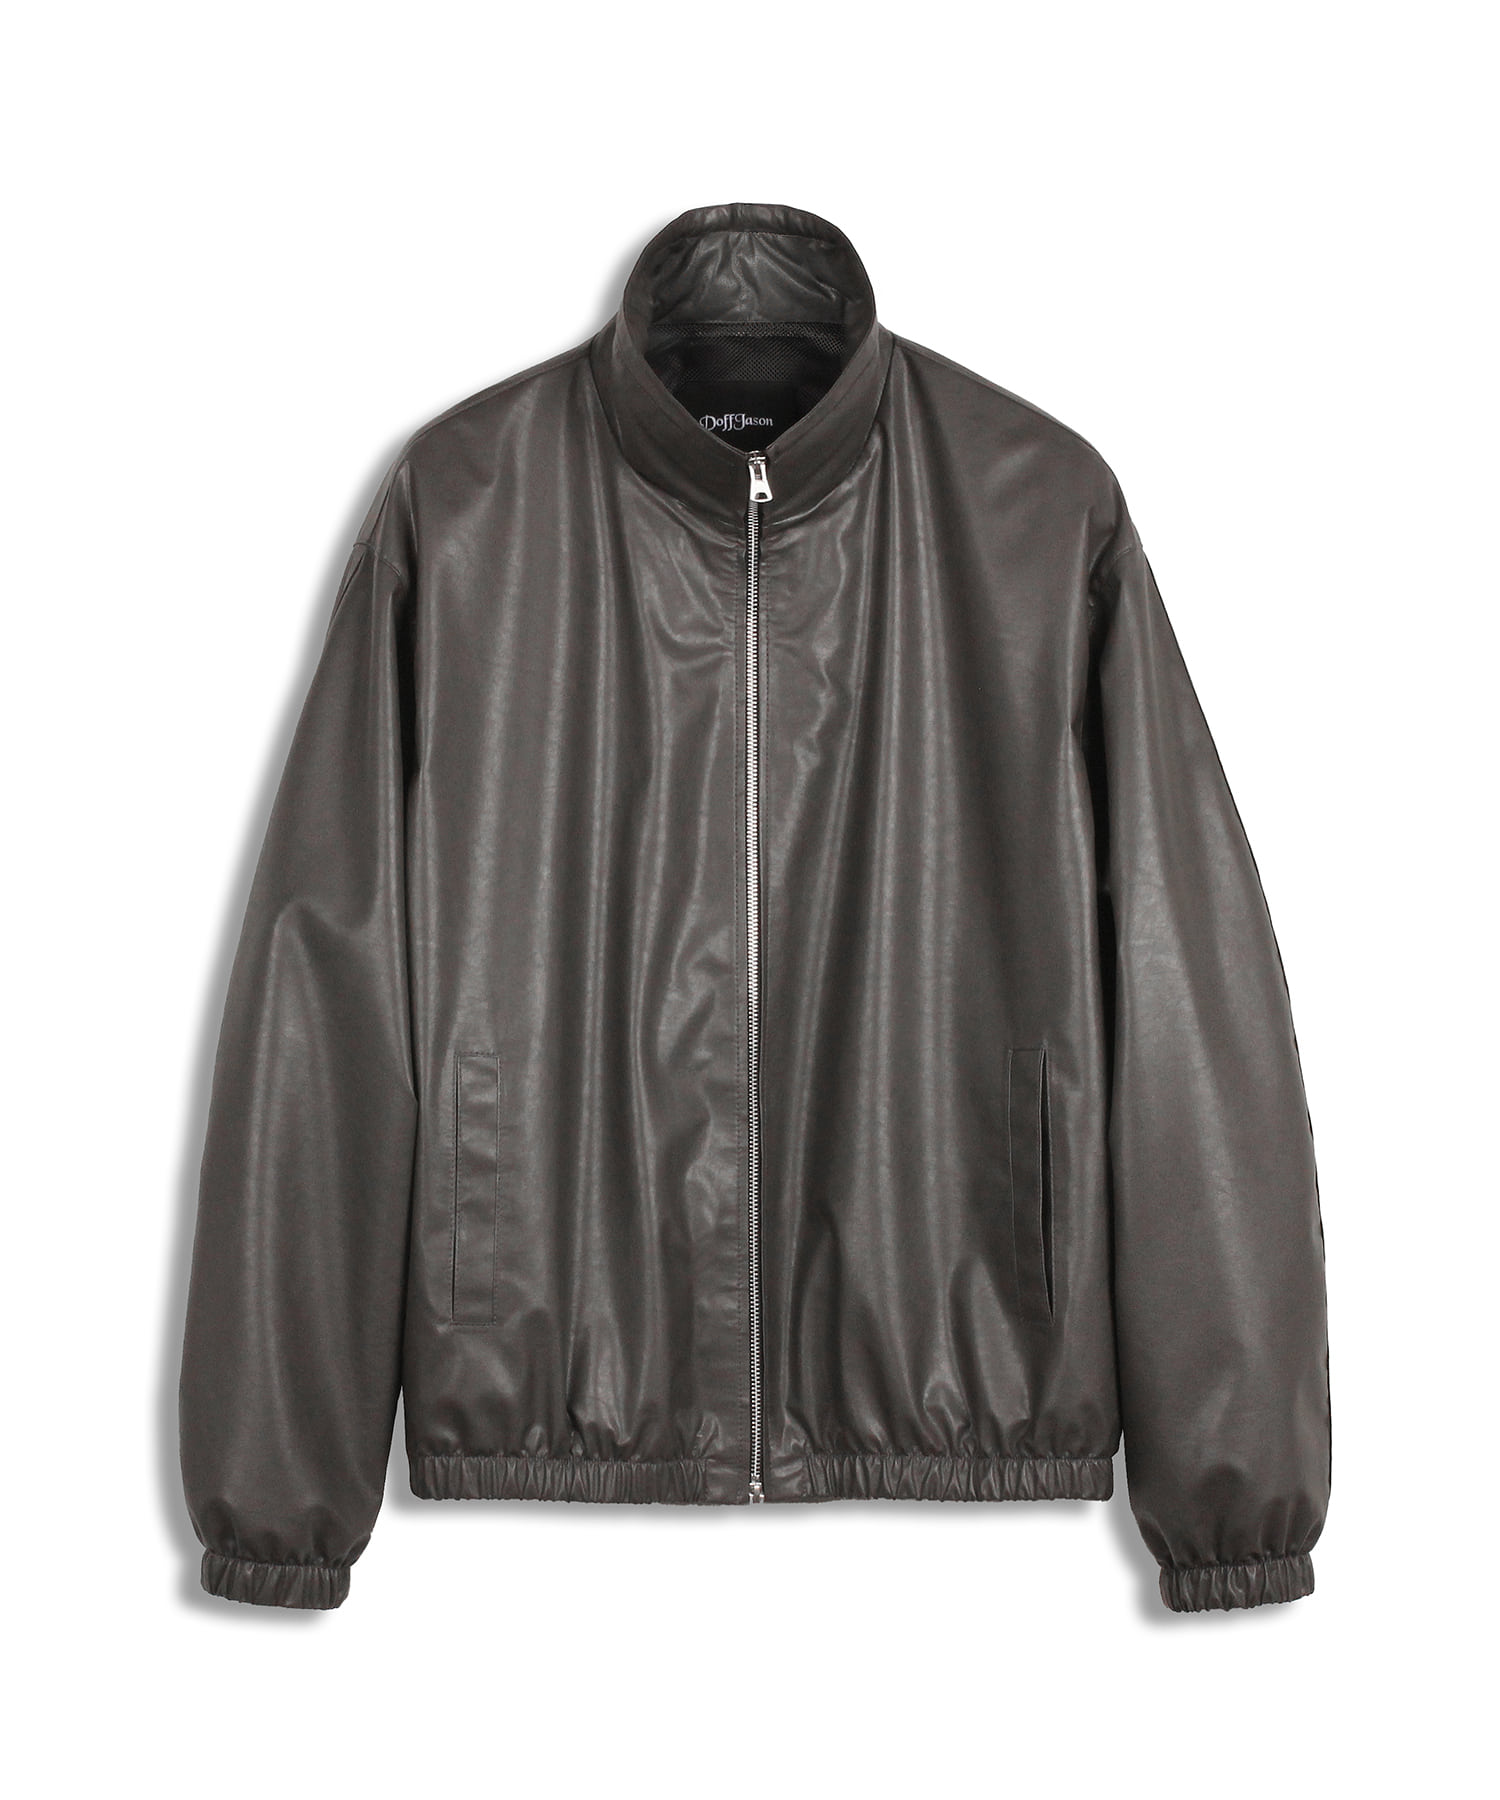 Overfit vegan leather windbreaker jacket (light gray)